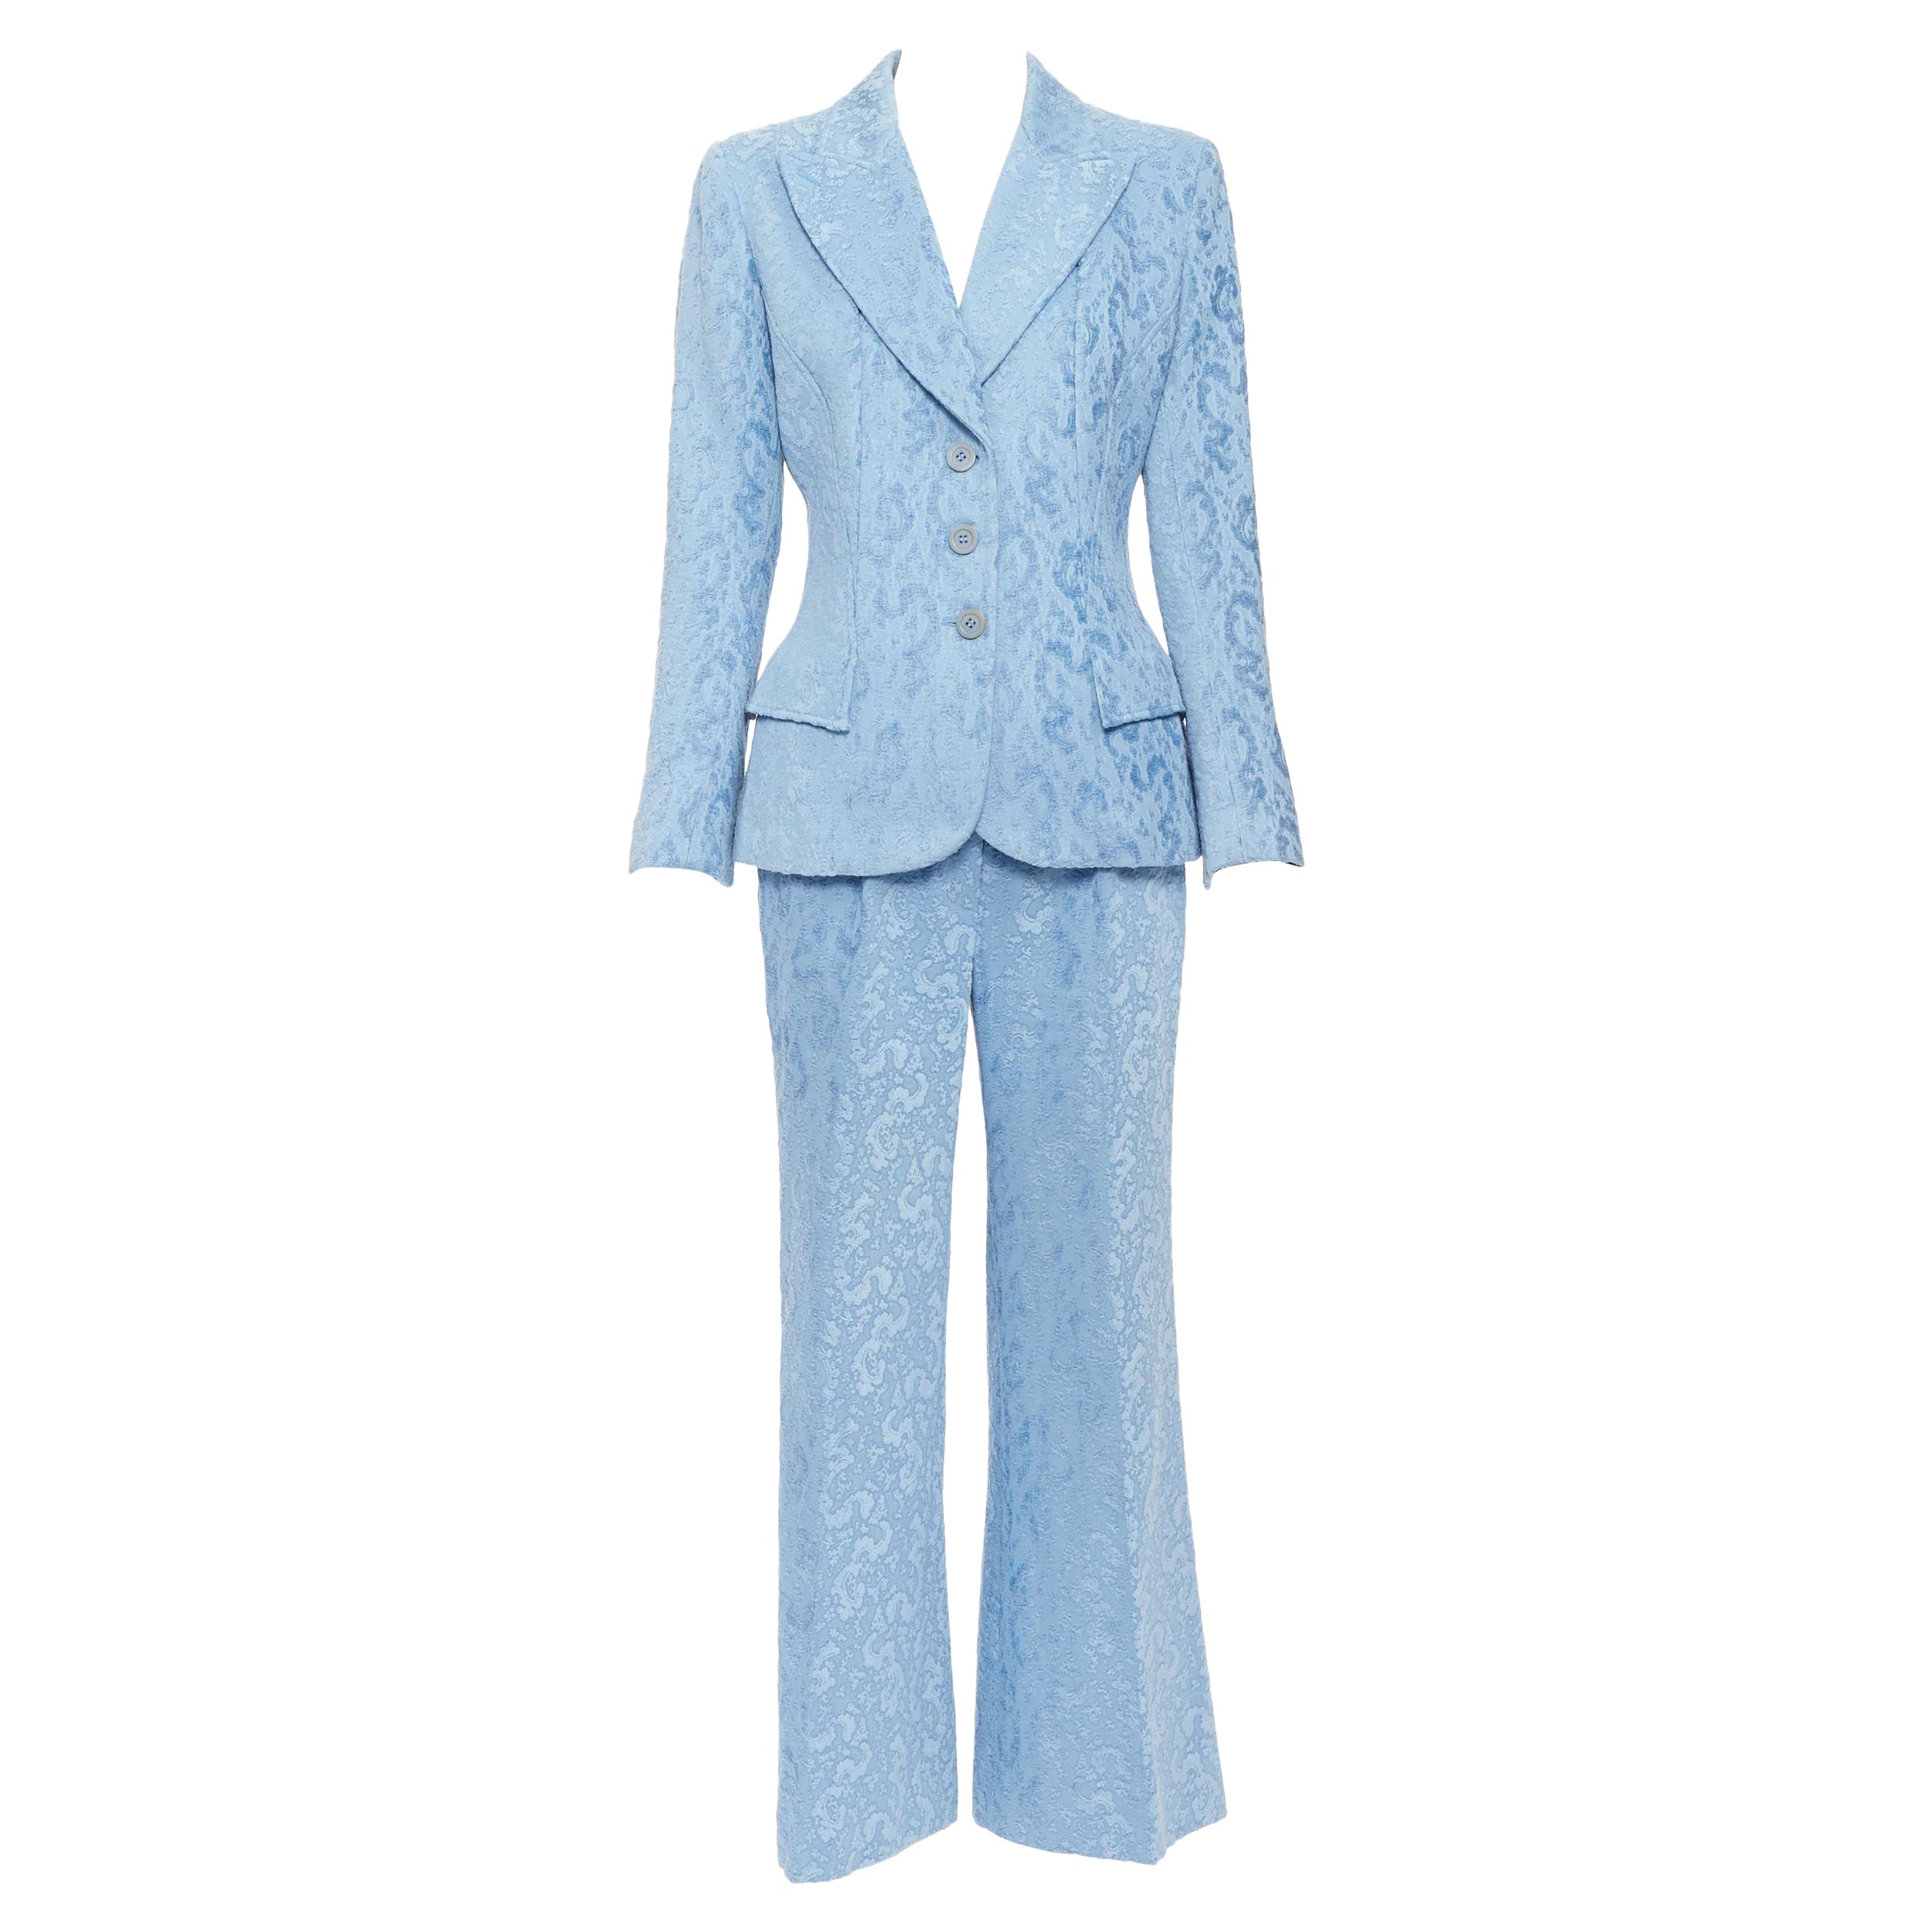 ANTONIO BERARDI light blue baroque jacquard evening blazer pant suit IT44 M